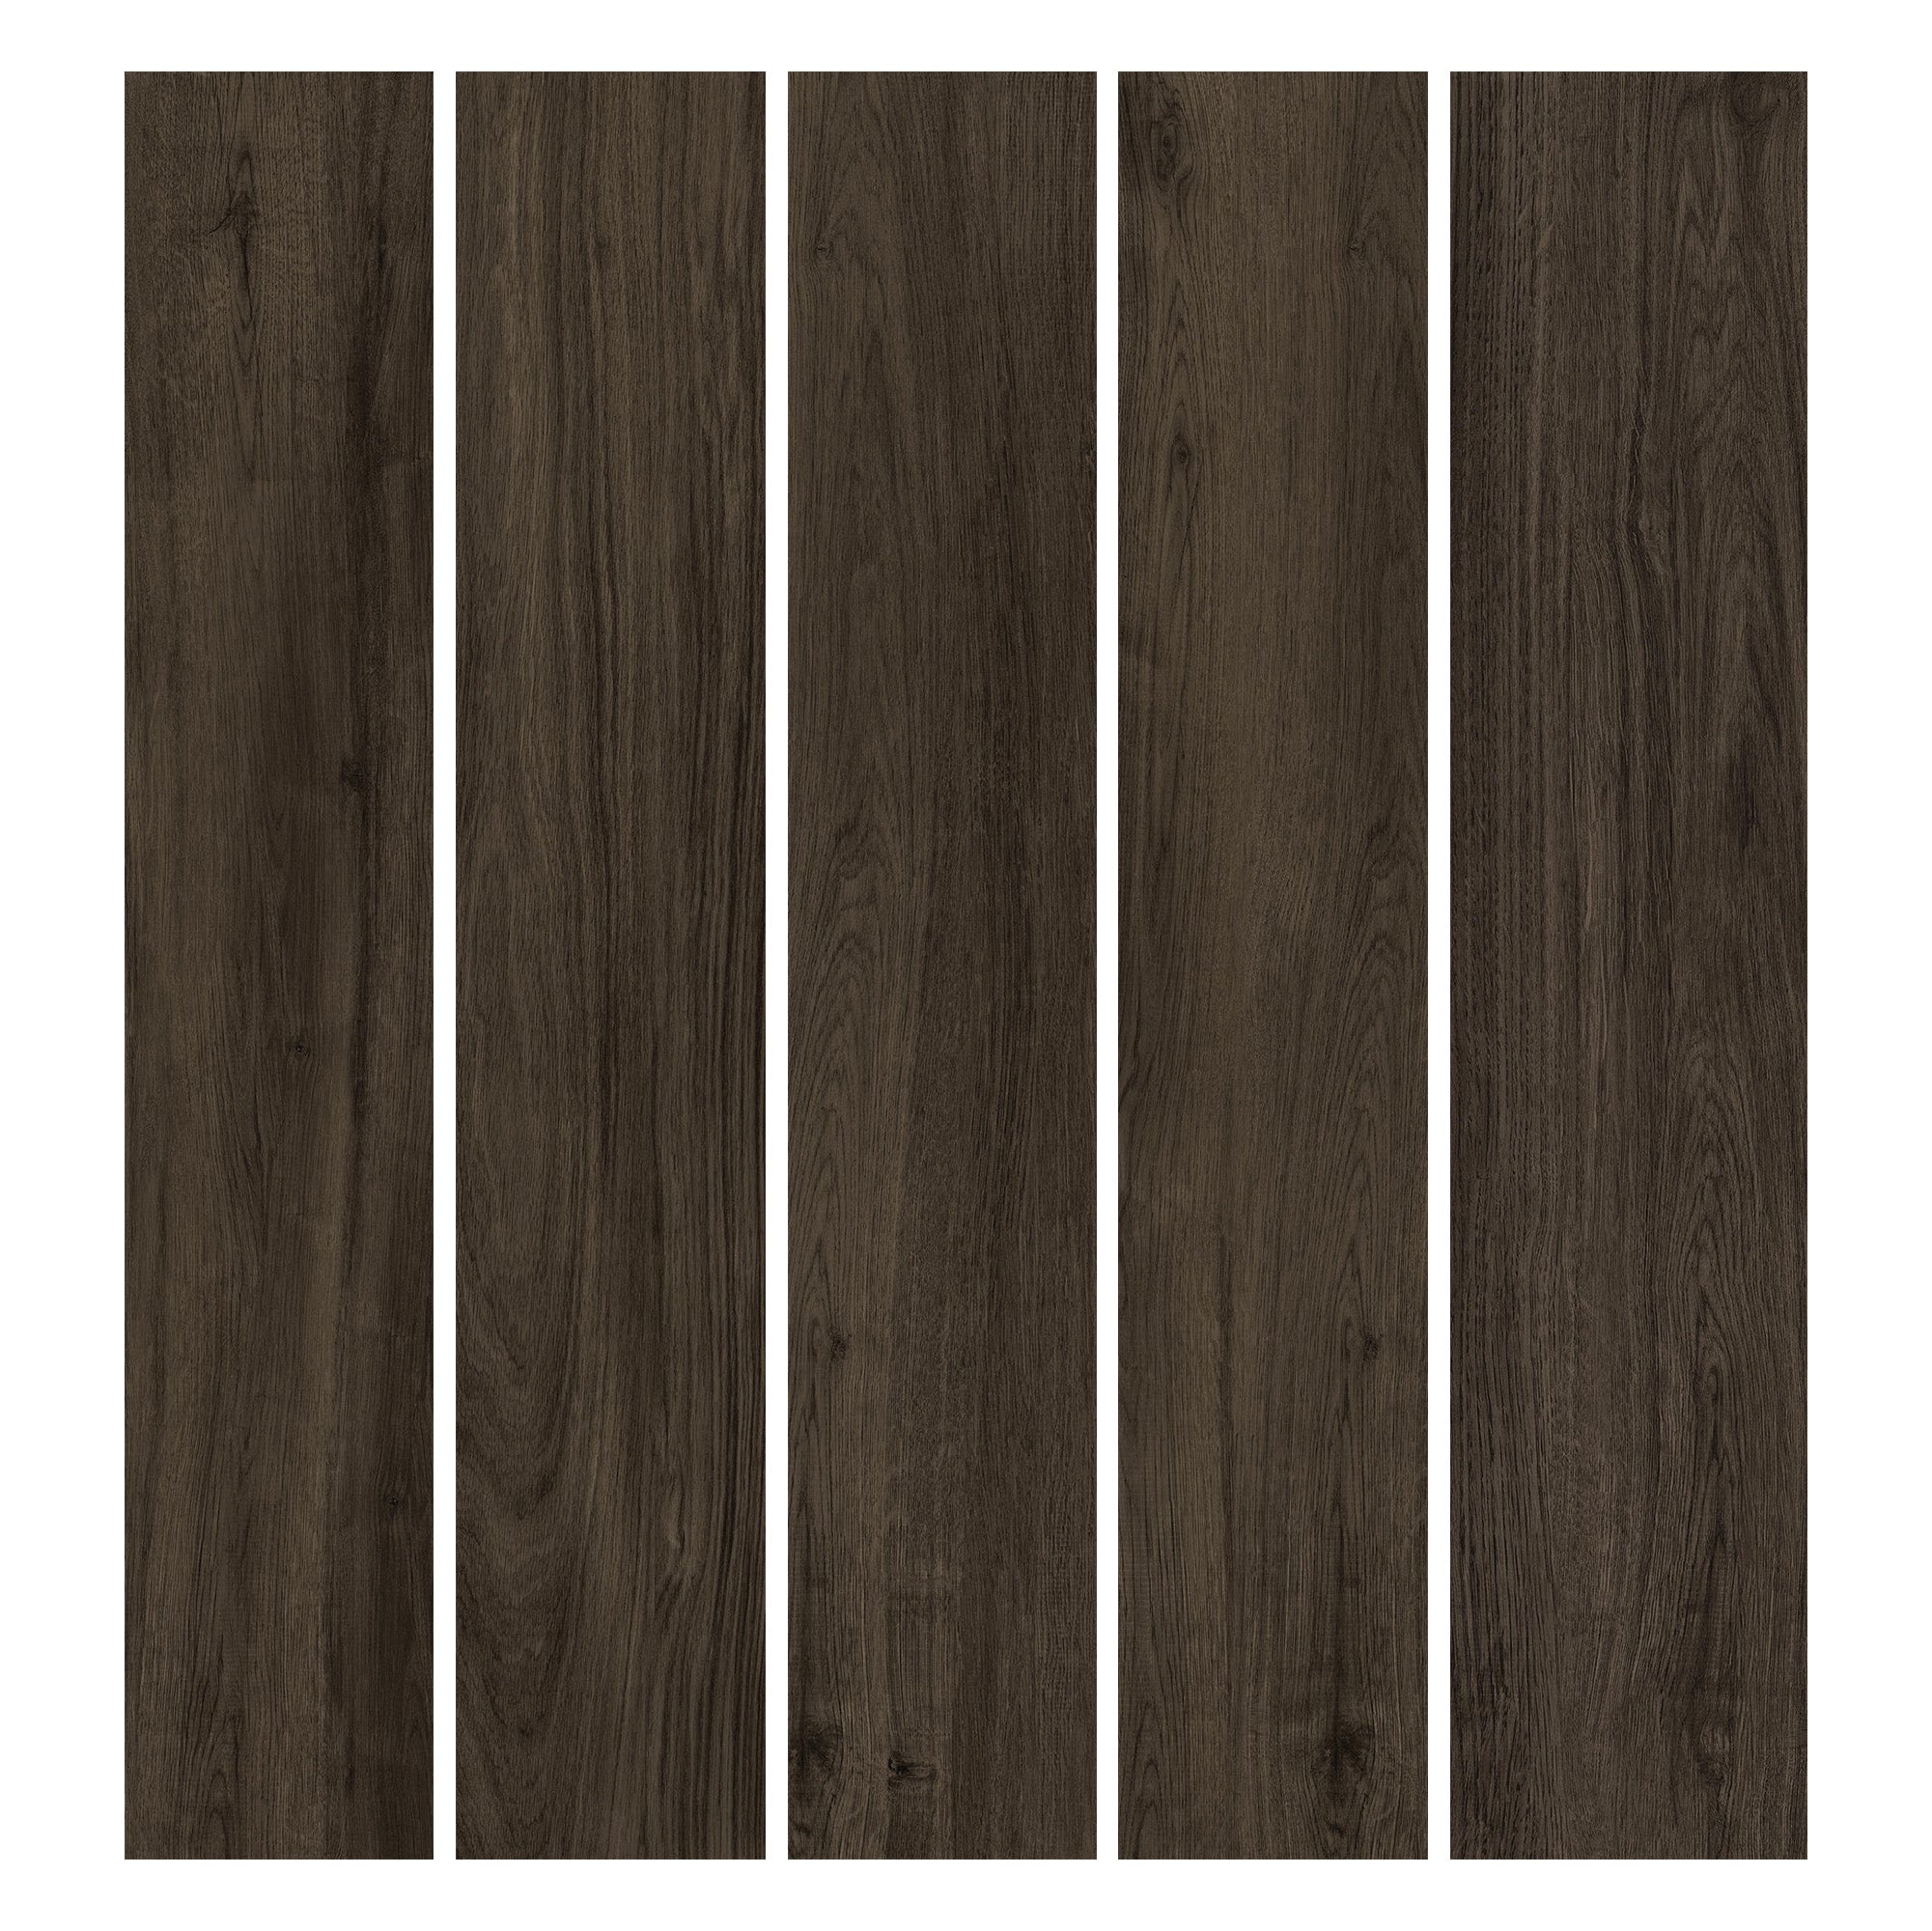 中國佛山磁磚 FOSHAN Tiles 木紋磚 Wood Grain Brick 地磚 啞光 G108 20×100cm